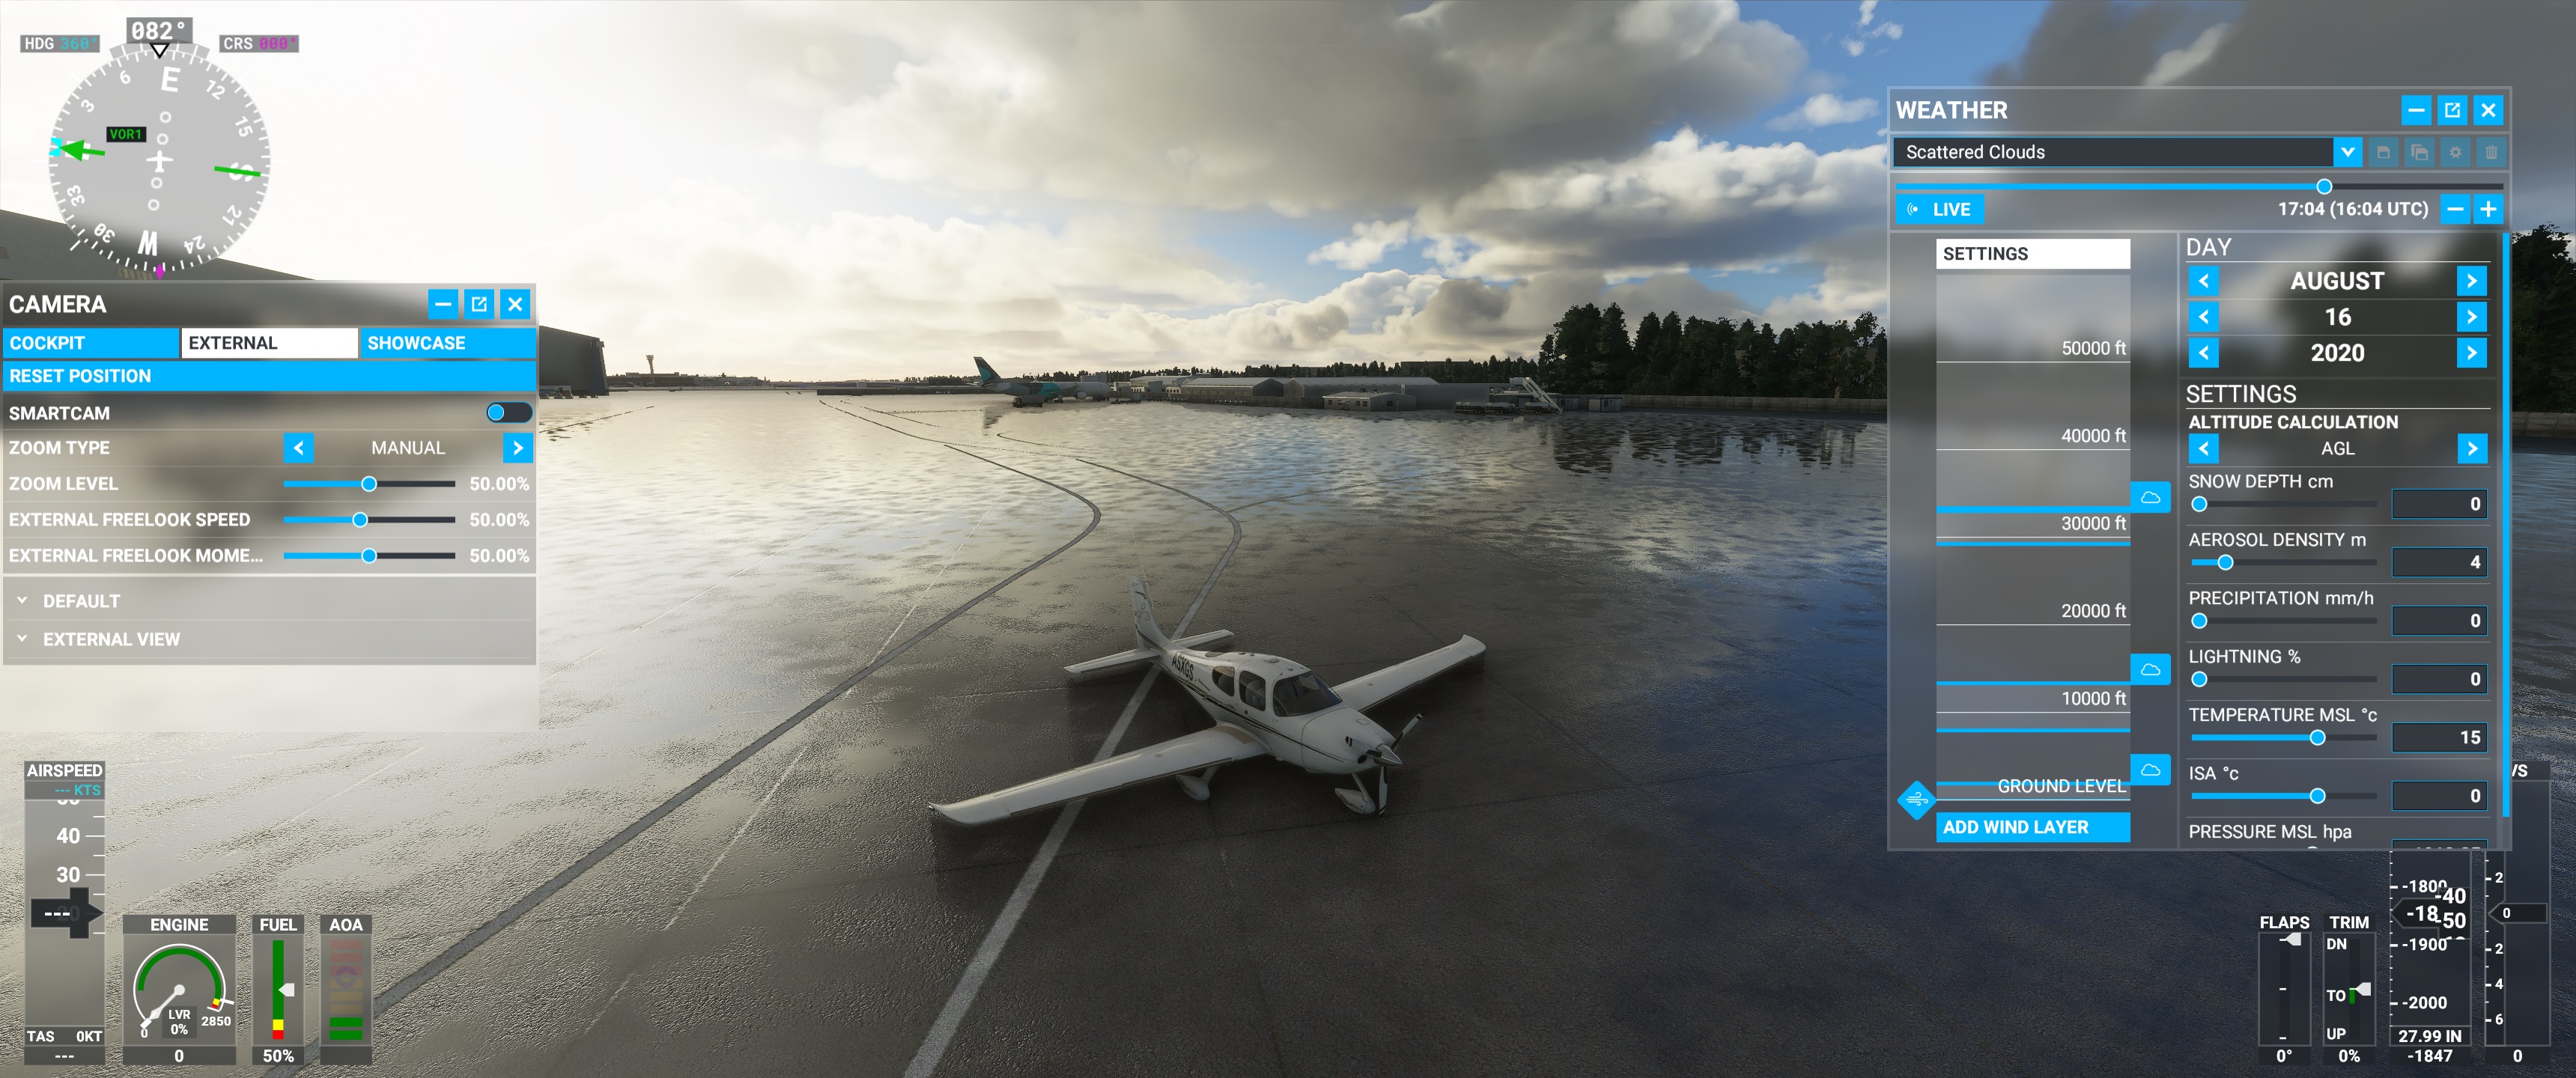 Microsoft Flight Simulator's new licensed flight stick just blew